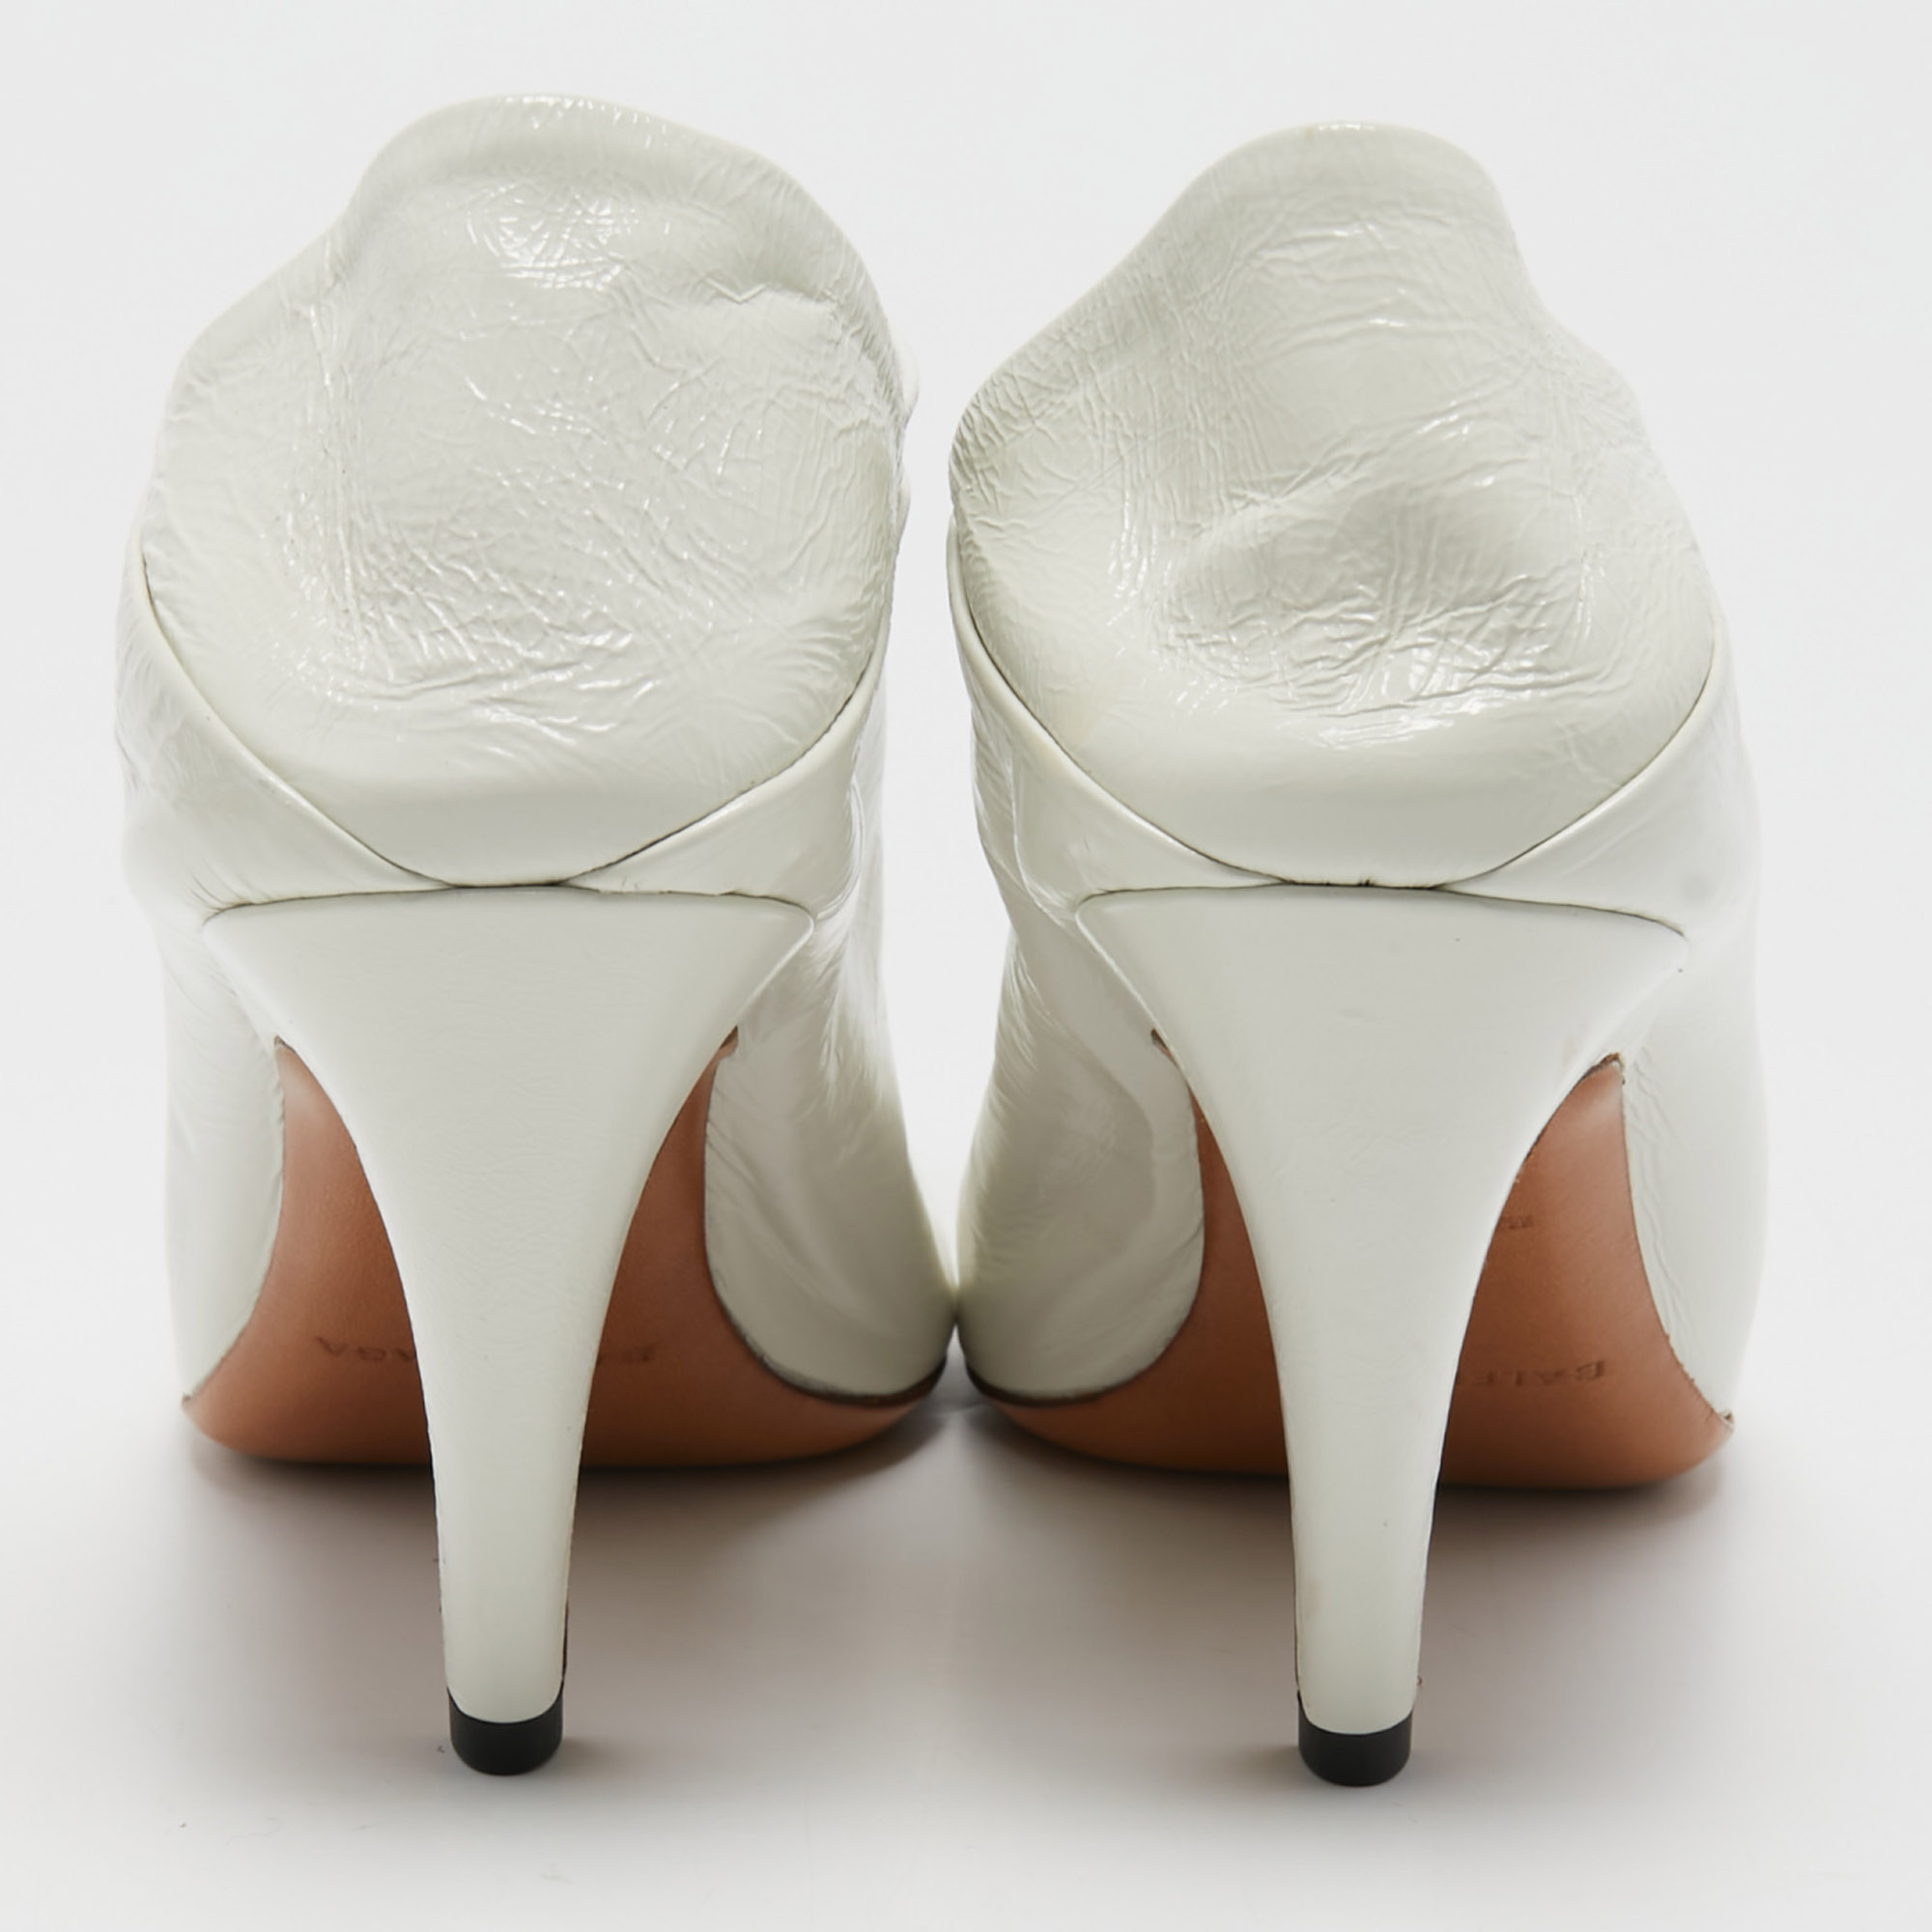 Balenciaga White Leather Square Toe Booties Size 38